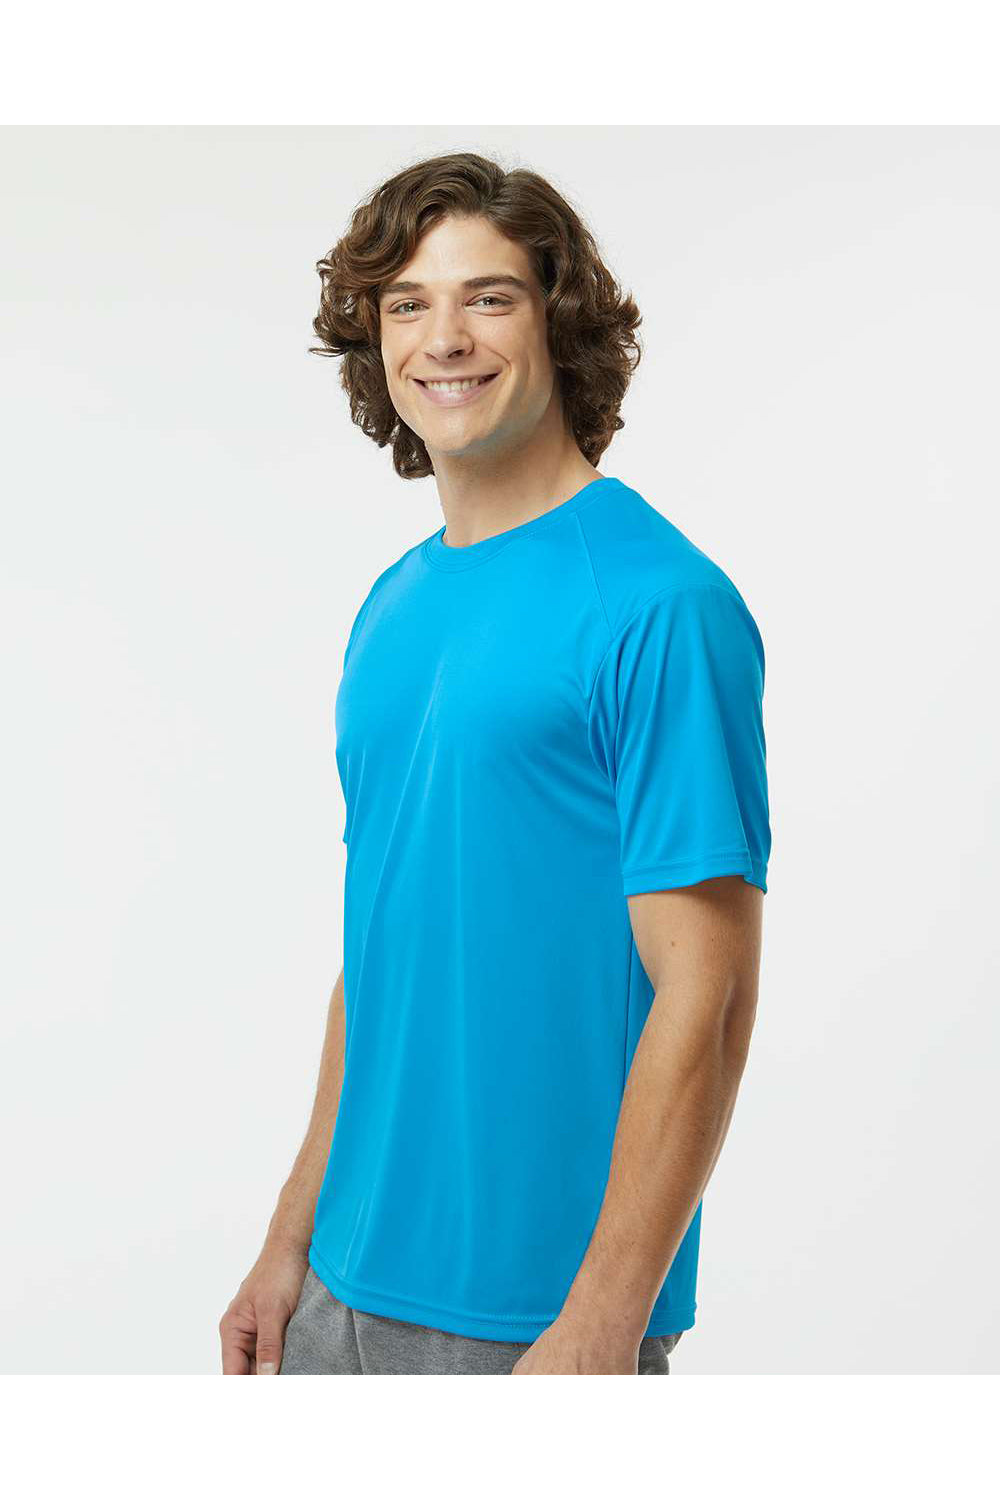 Paragon 200 Mens Islander Performance Short Sleeve Crewneck T-Shirt Turquoise Blue Model Side